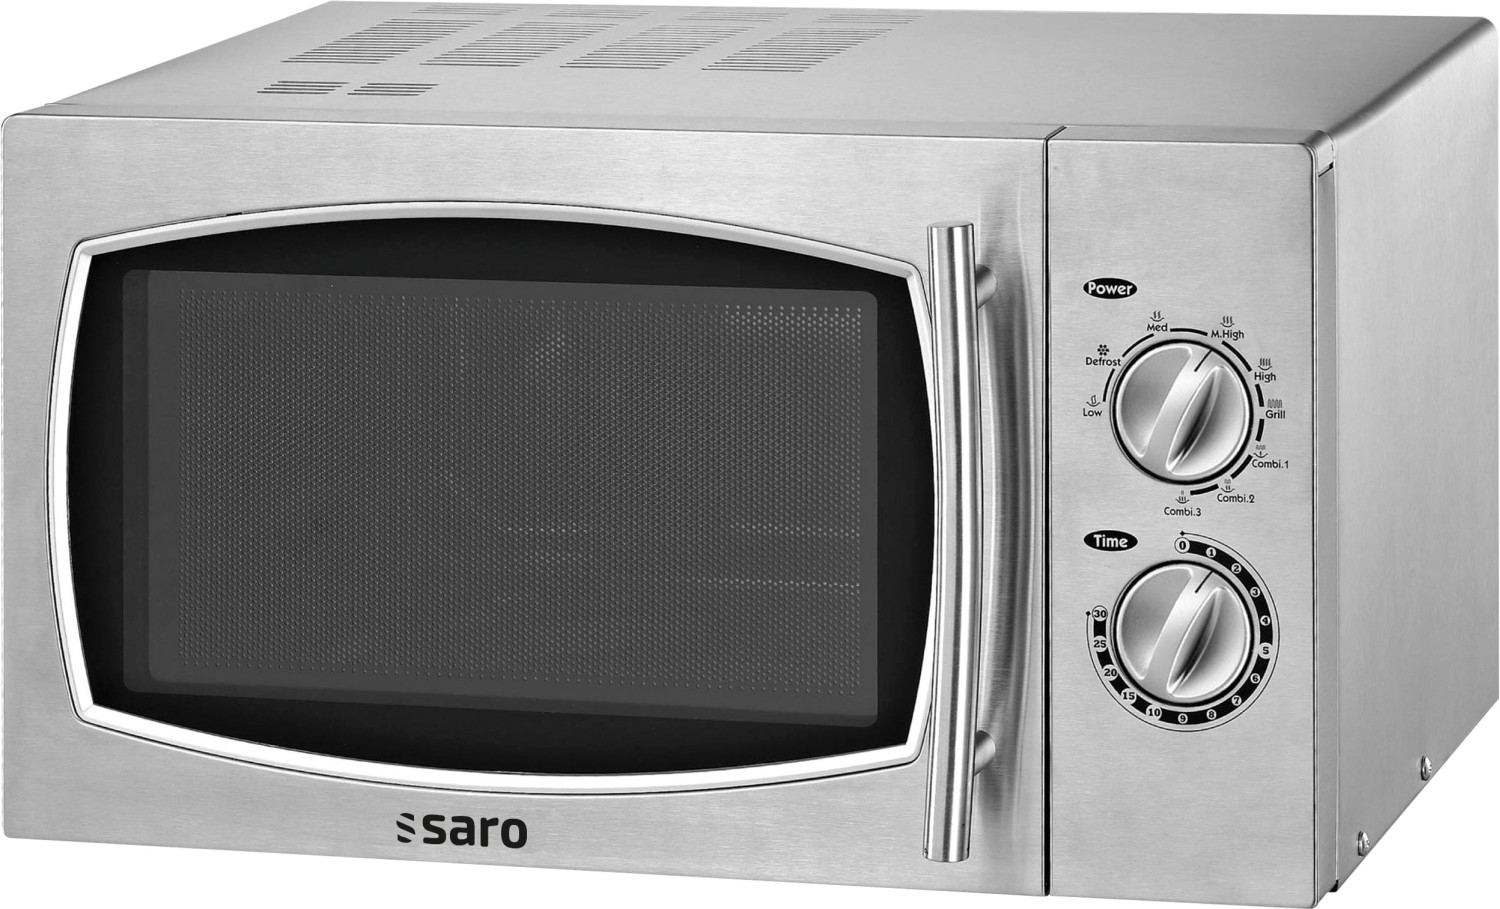  Saro Mikrowelle mit Grillfunktion WD 900 